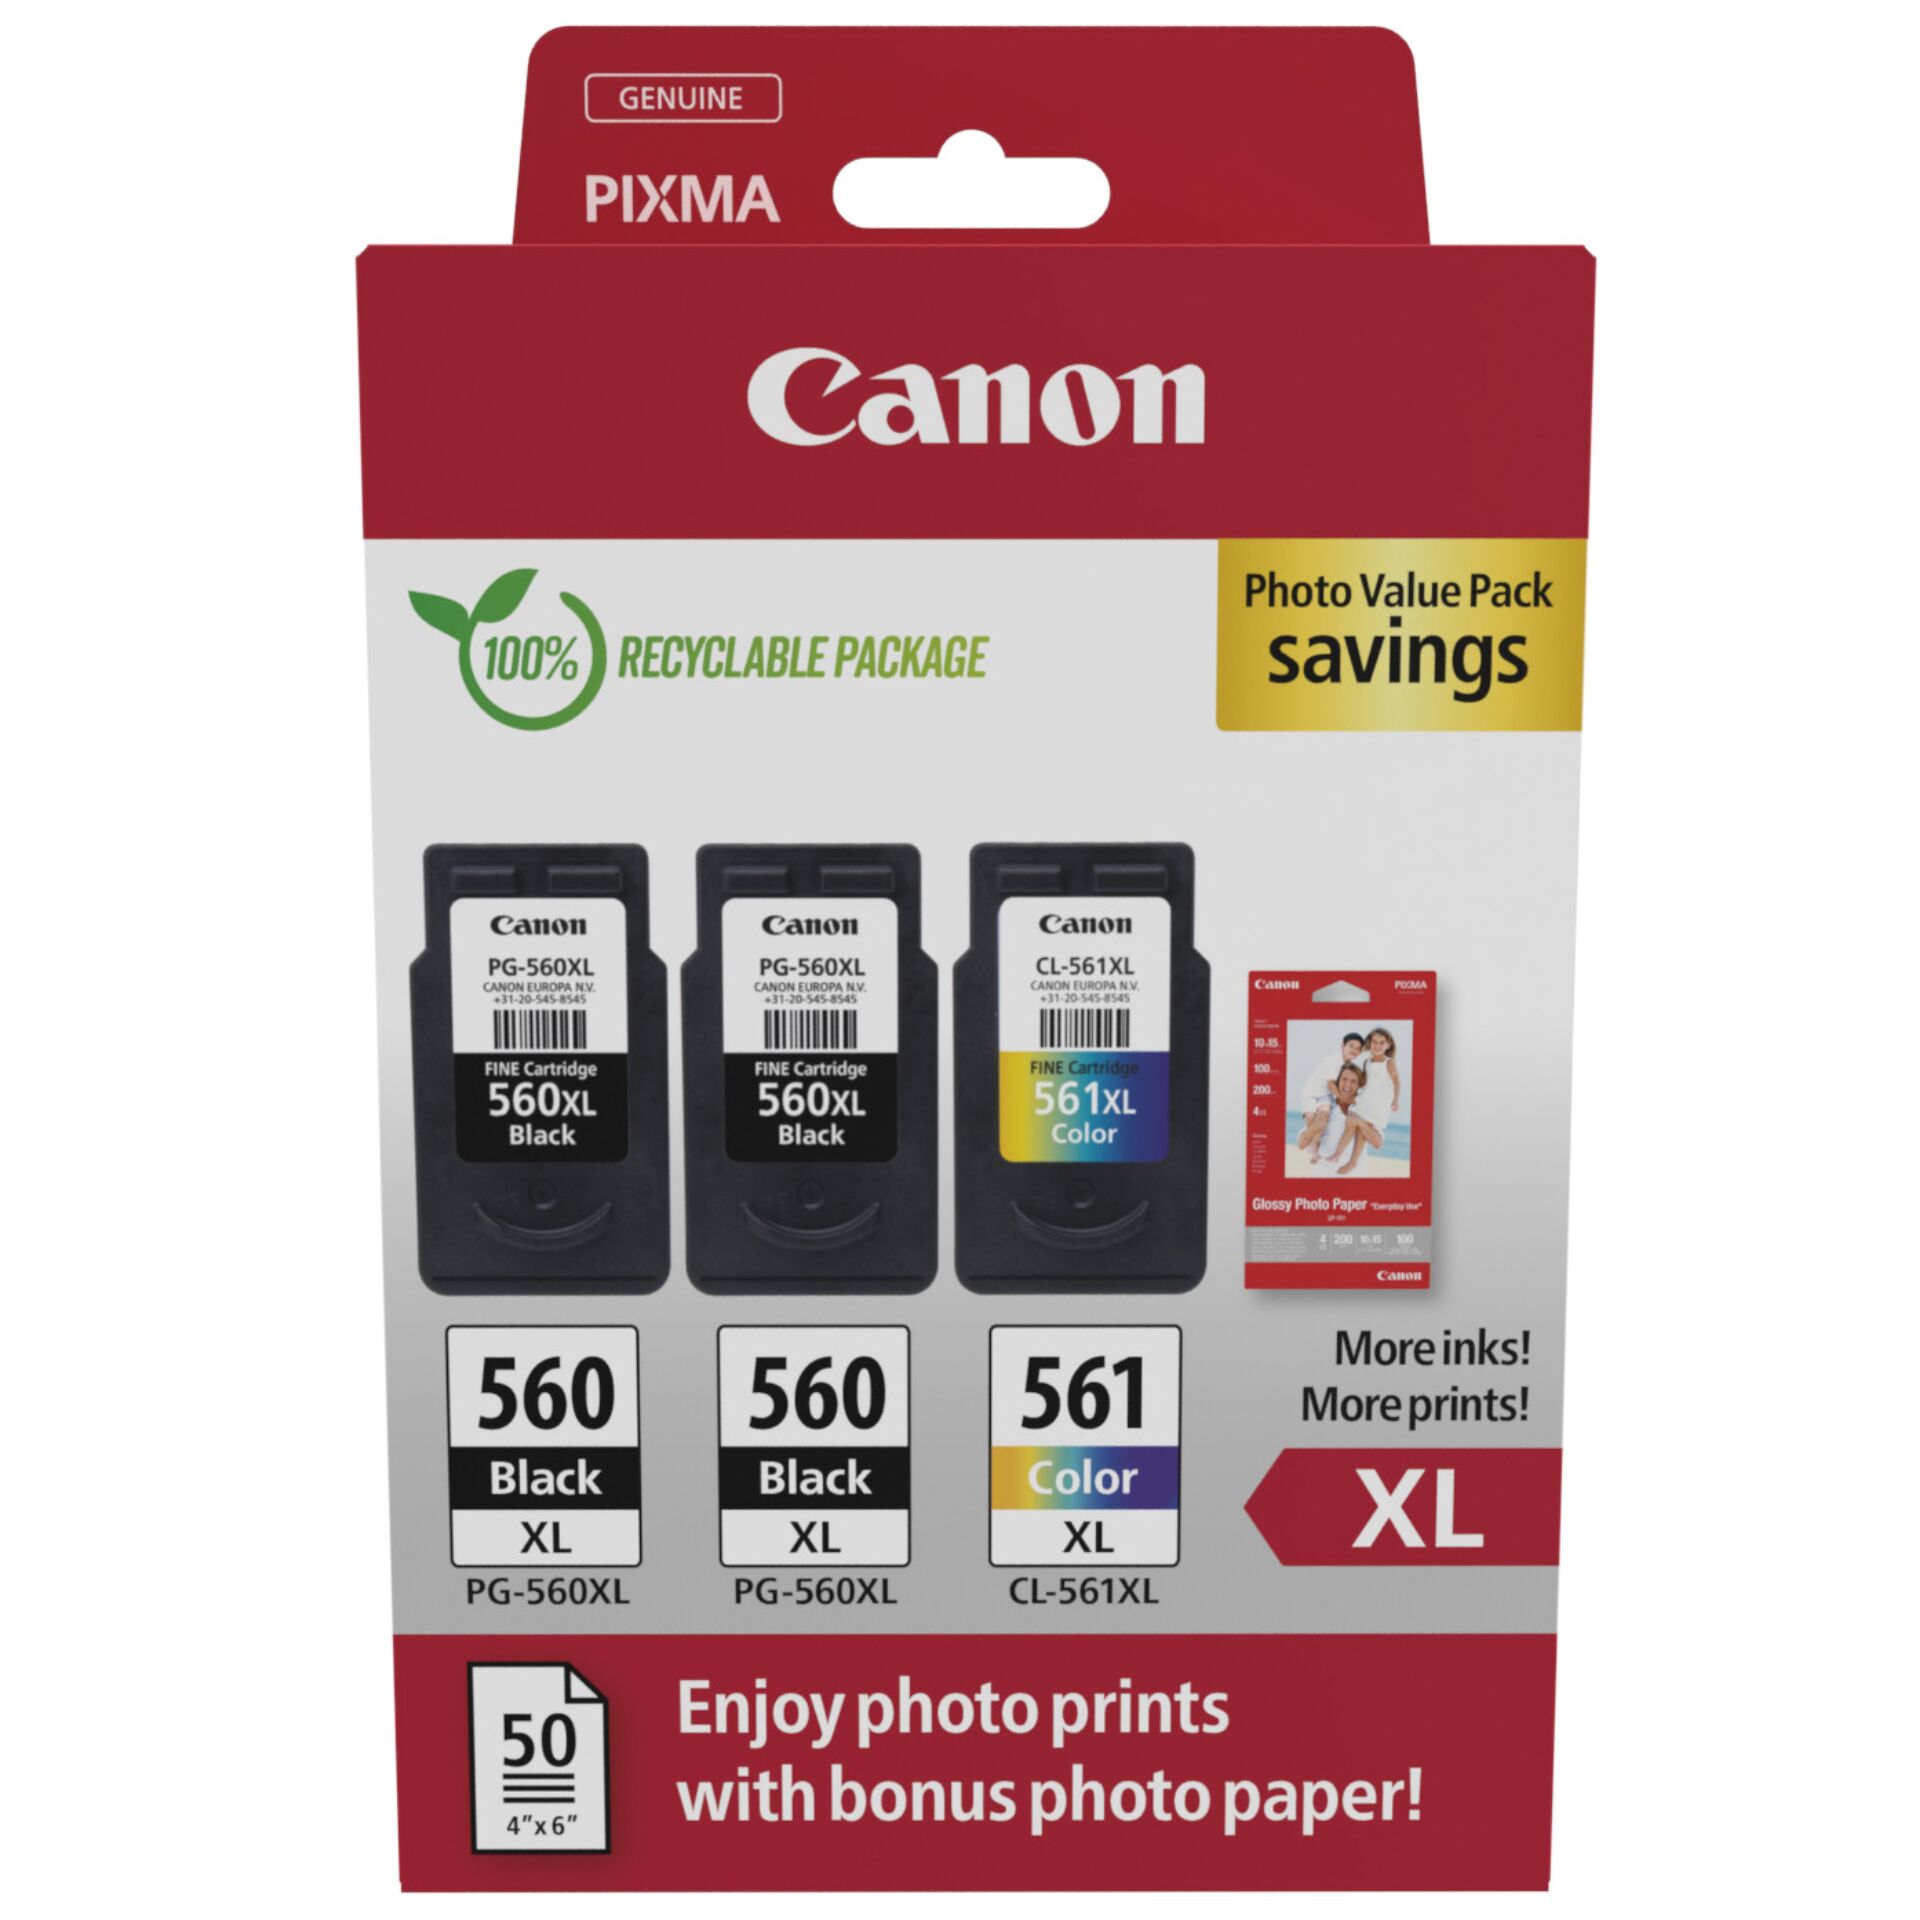 Canon PG-560 XL x2 / CL-561 XL Photo Value Pack